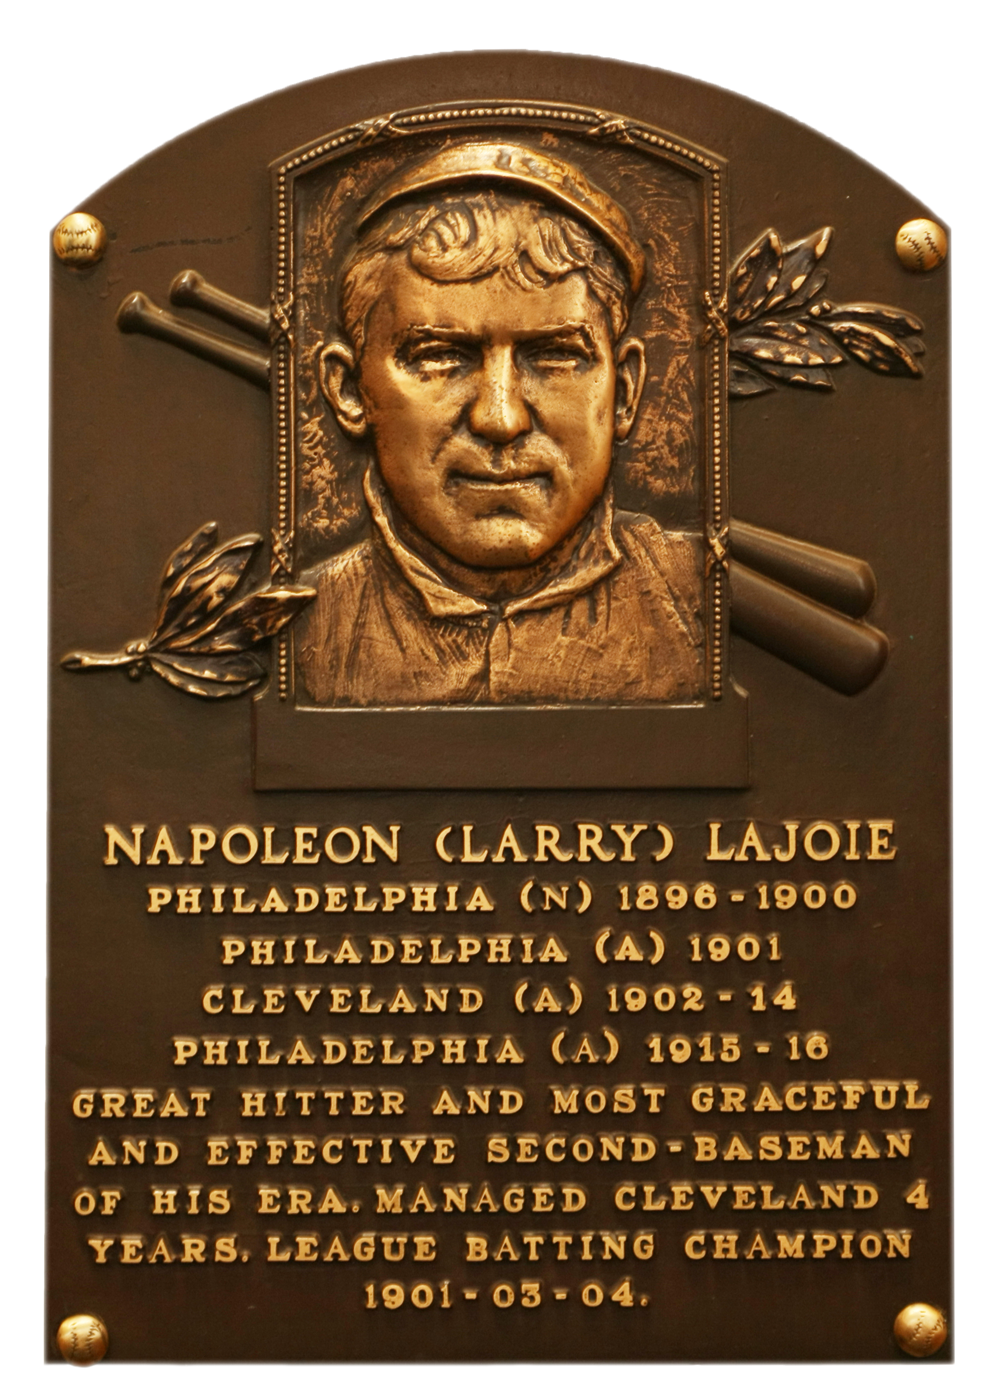 Nap Lajoie Hall of Fame plaque